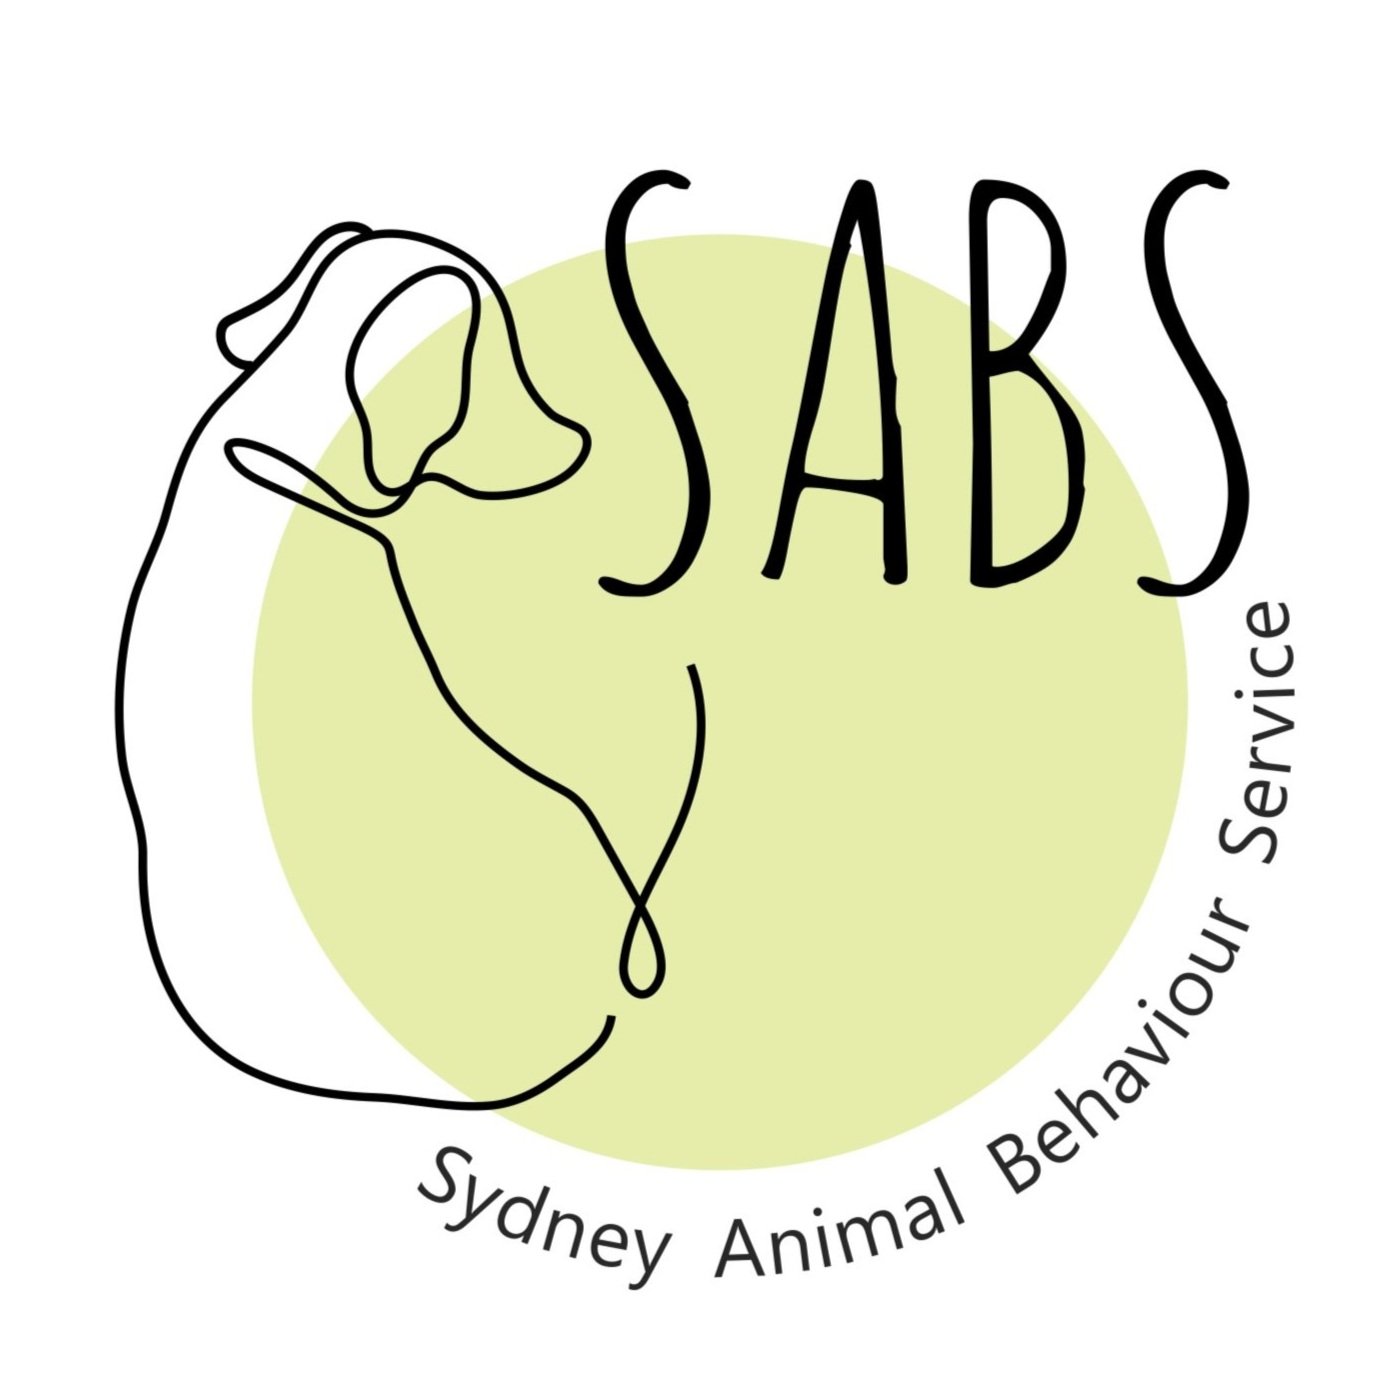 Sydney Animal Behaviour Service